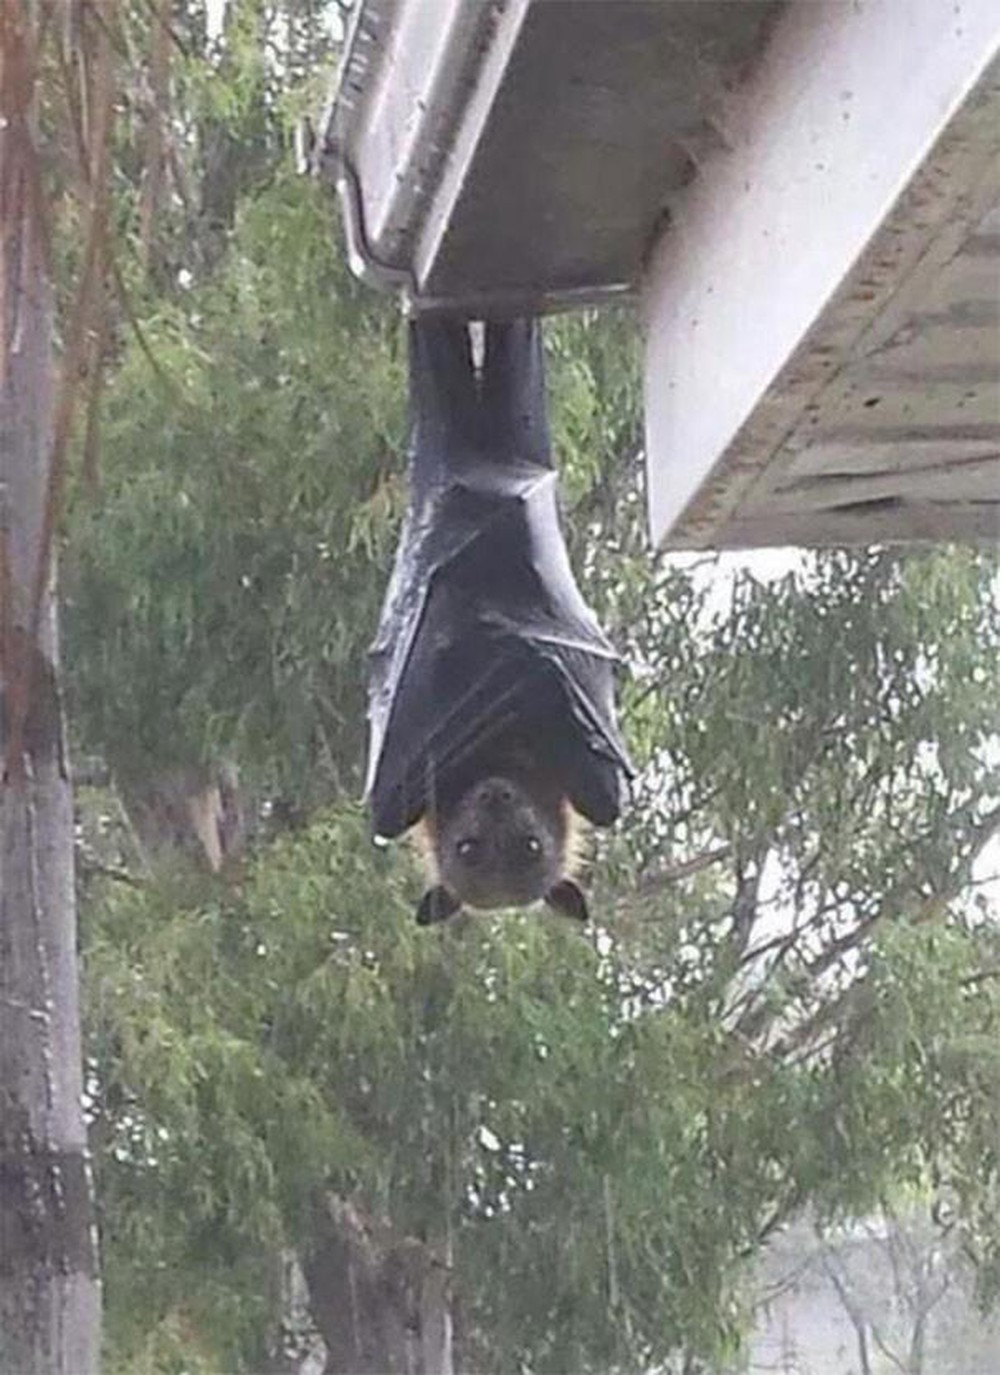 Huge bat